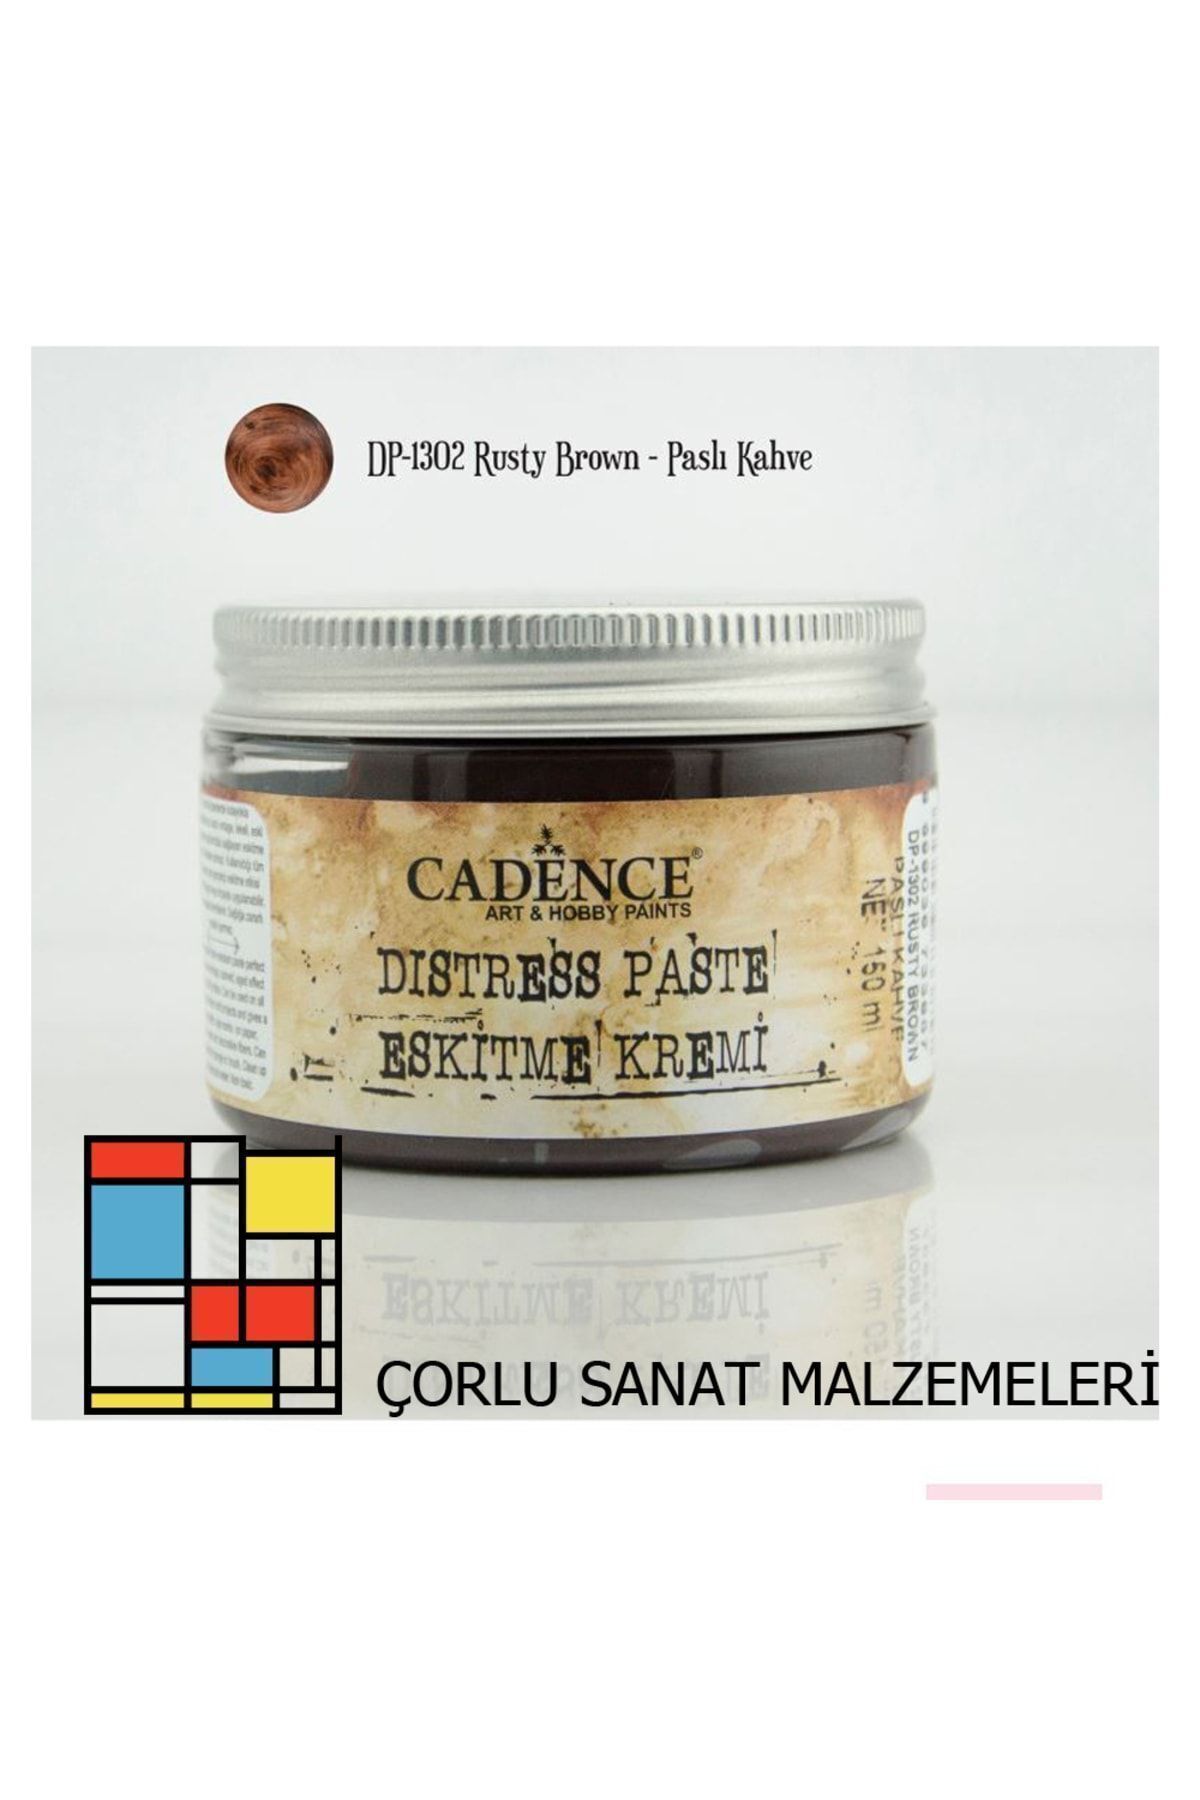 Cadence Distress Paste - Eskitme Kremi 150ml Dp 1302 Rusty Brown - Paslı Kahve